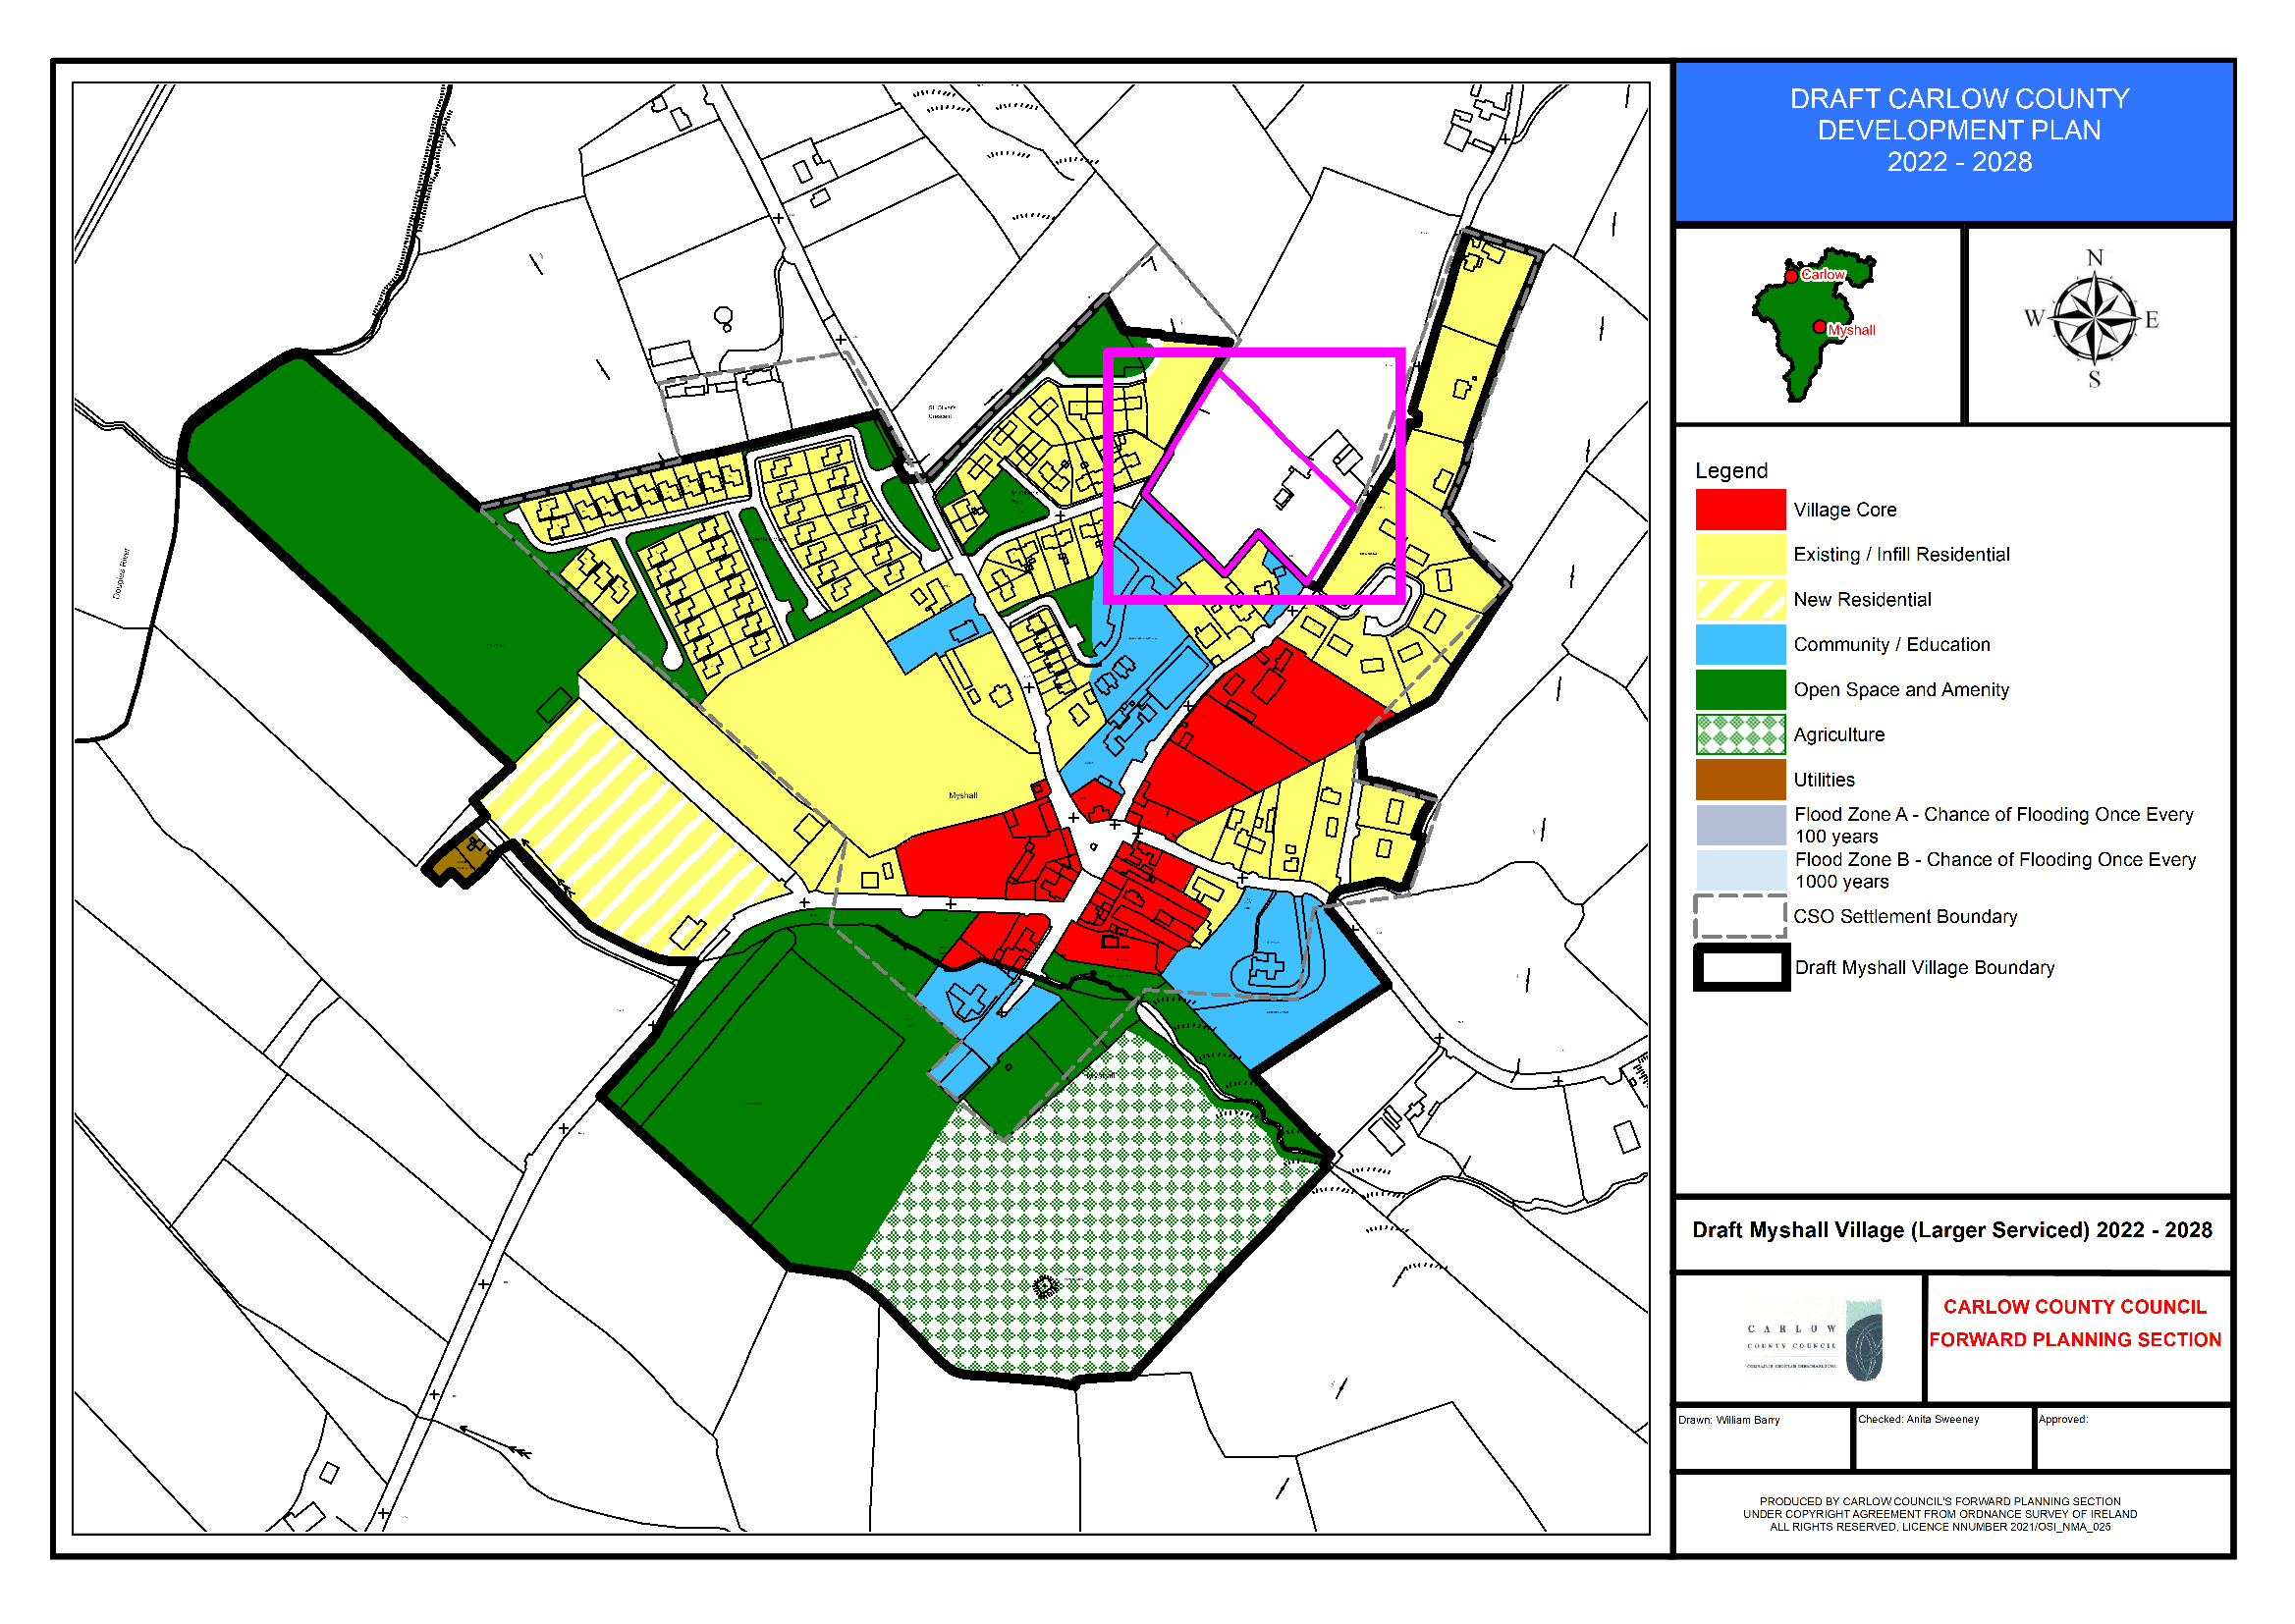 Draft Myshall Village (Larger Serviced) 2022-2028